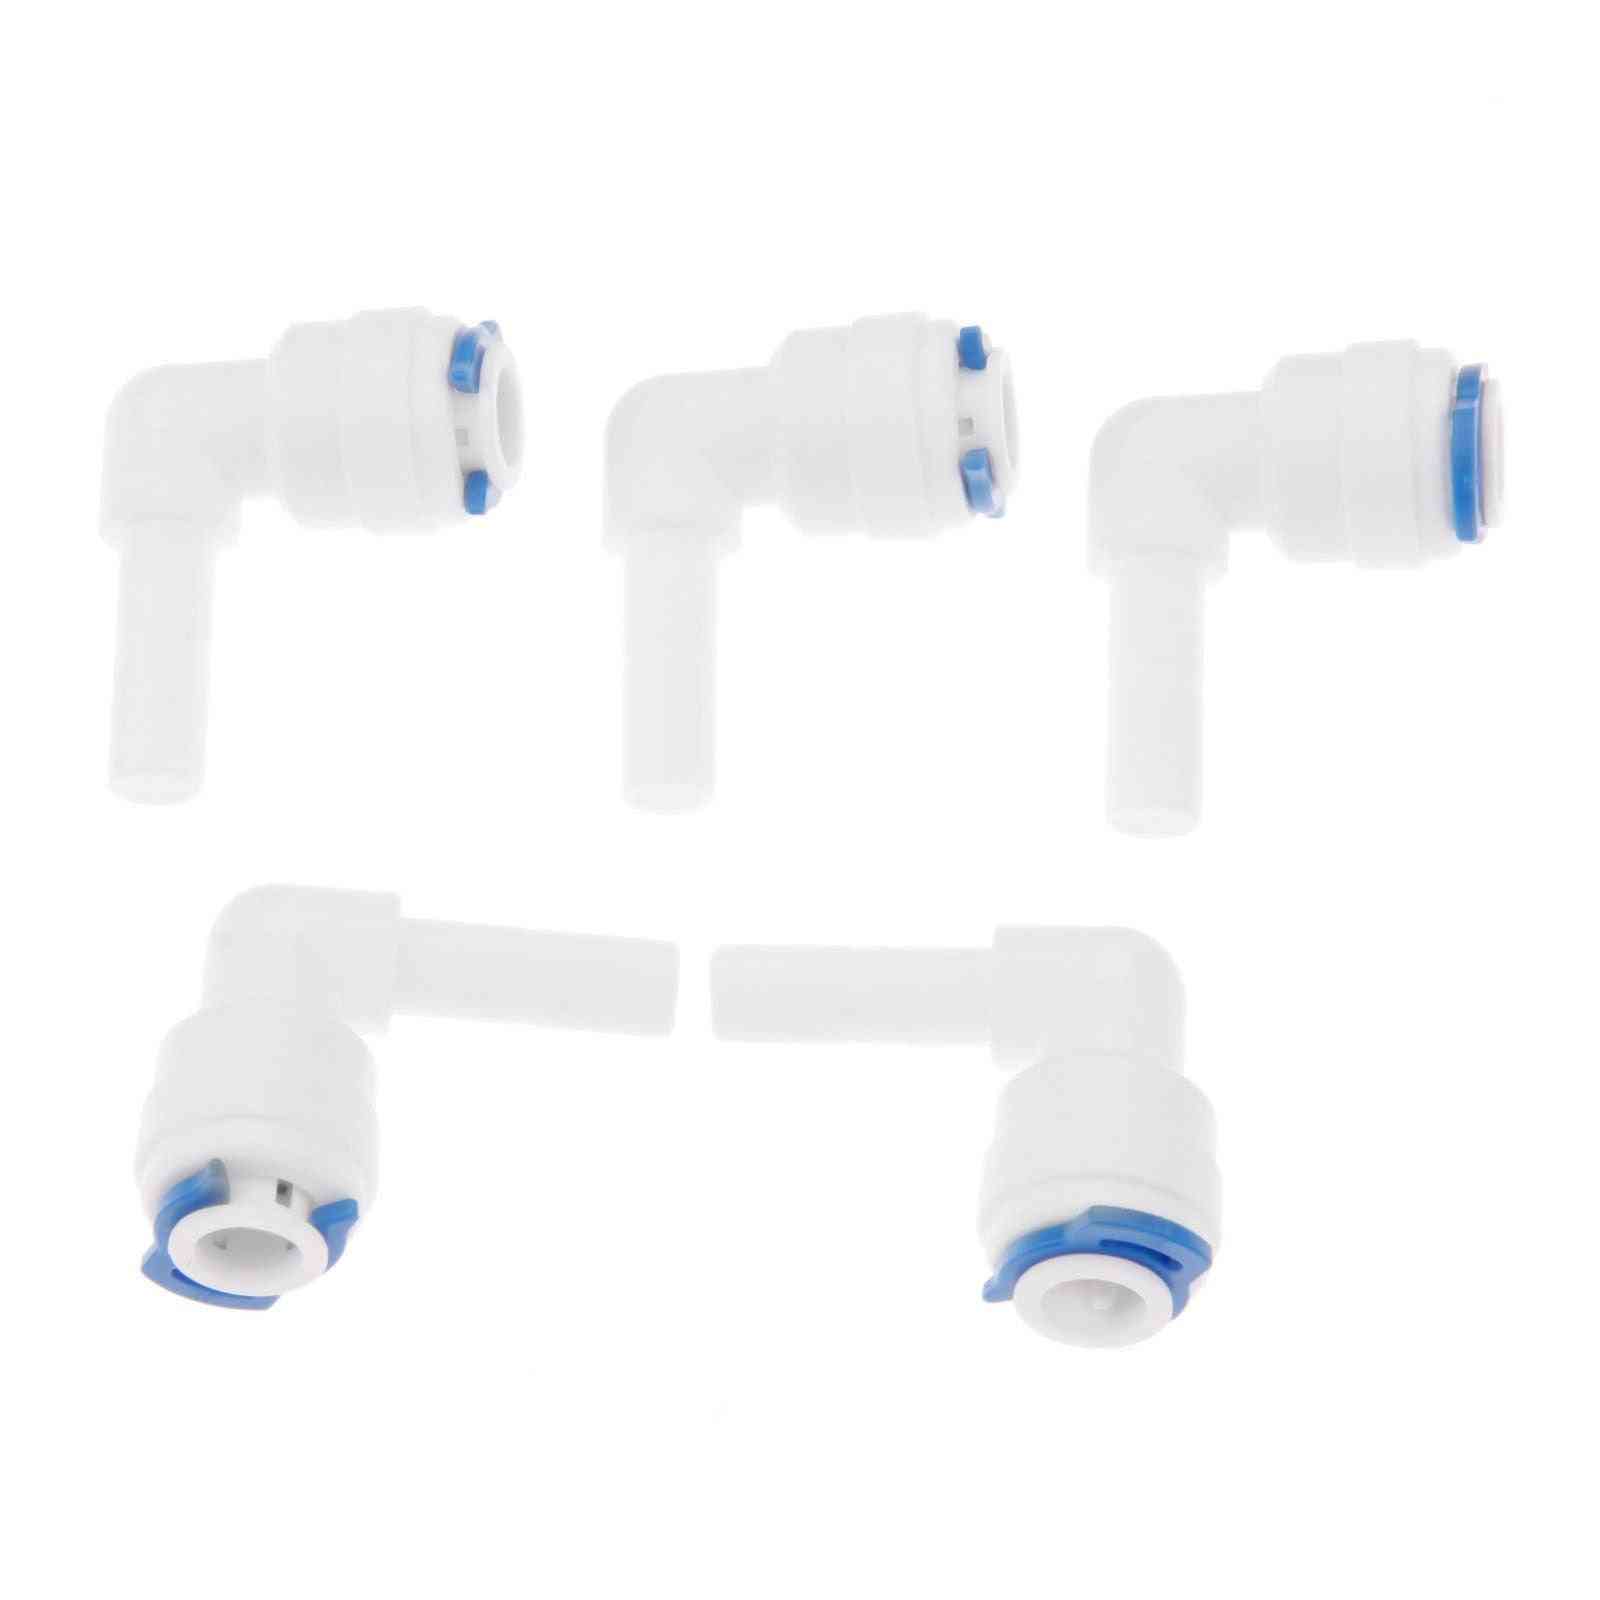 Ro Water Filter Connectors